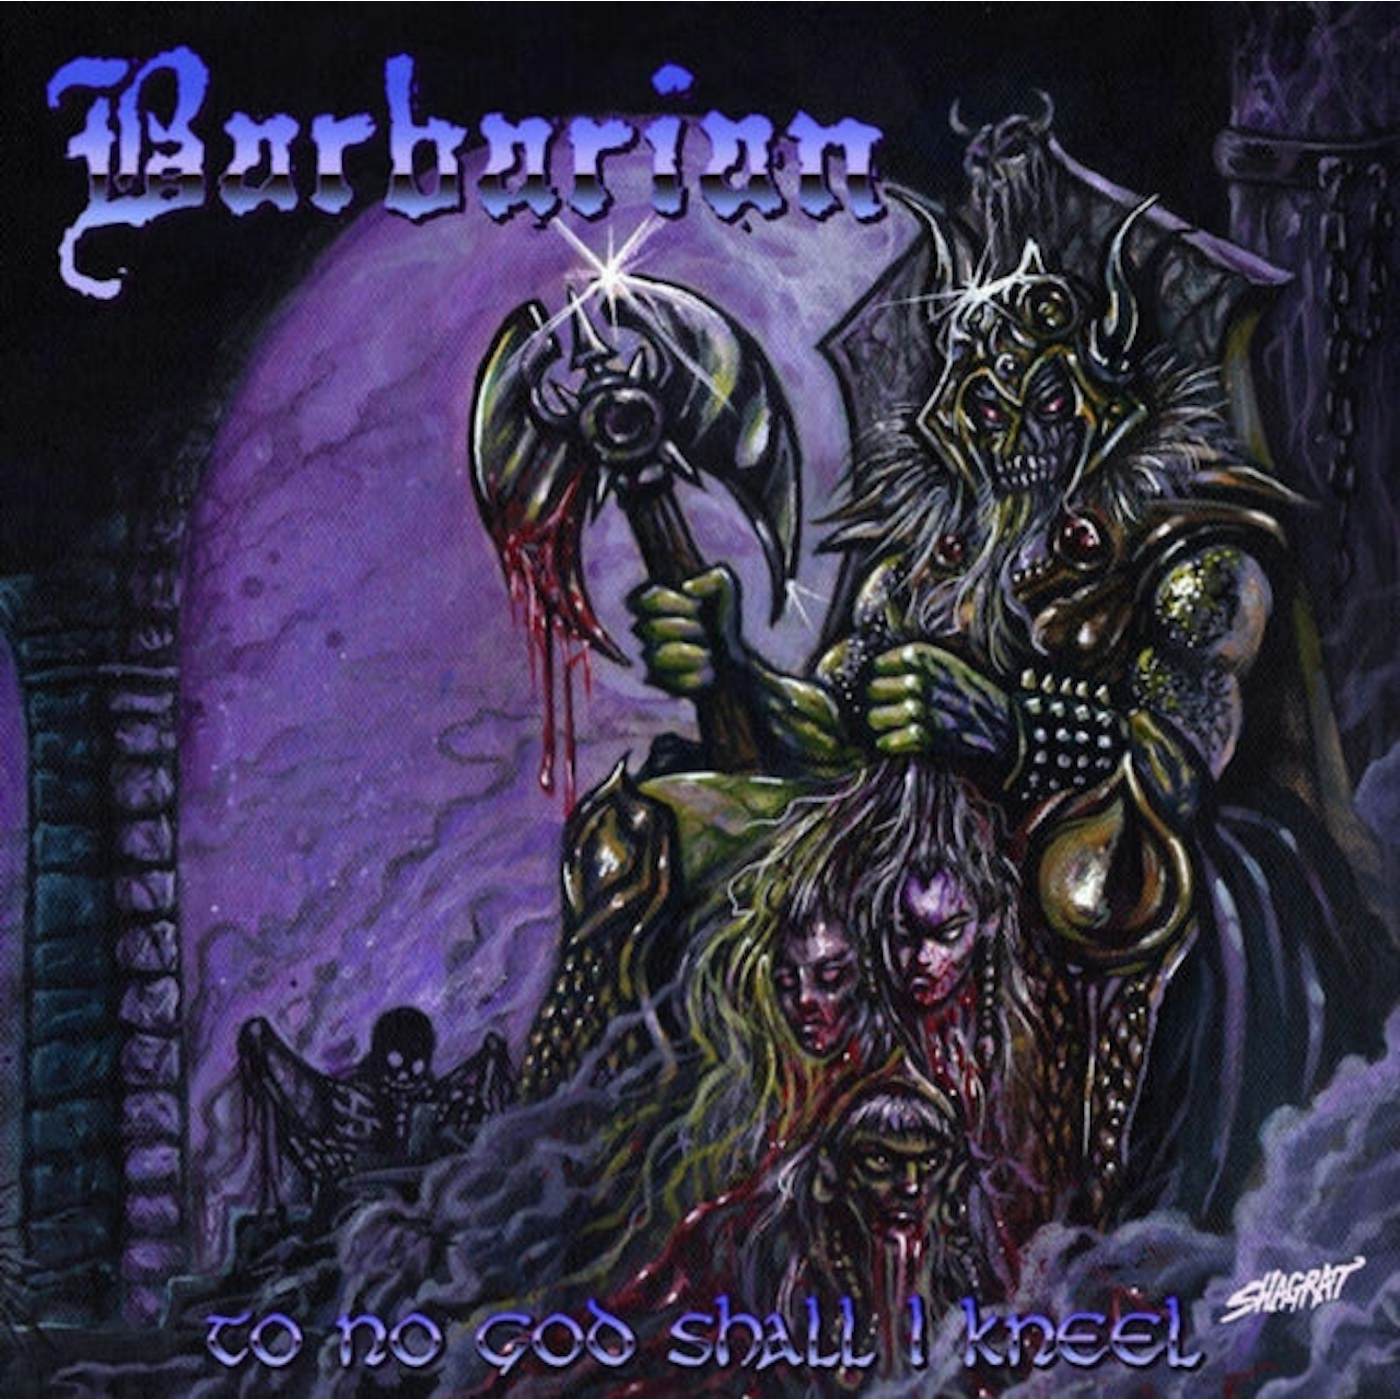 Barbarian CD - To No God Shall I Kneel